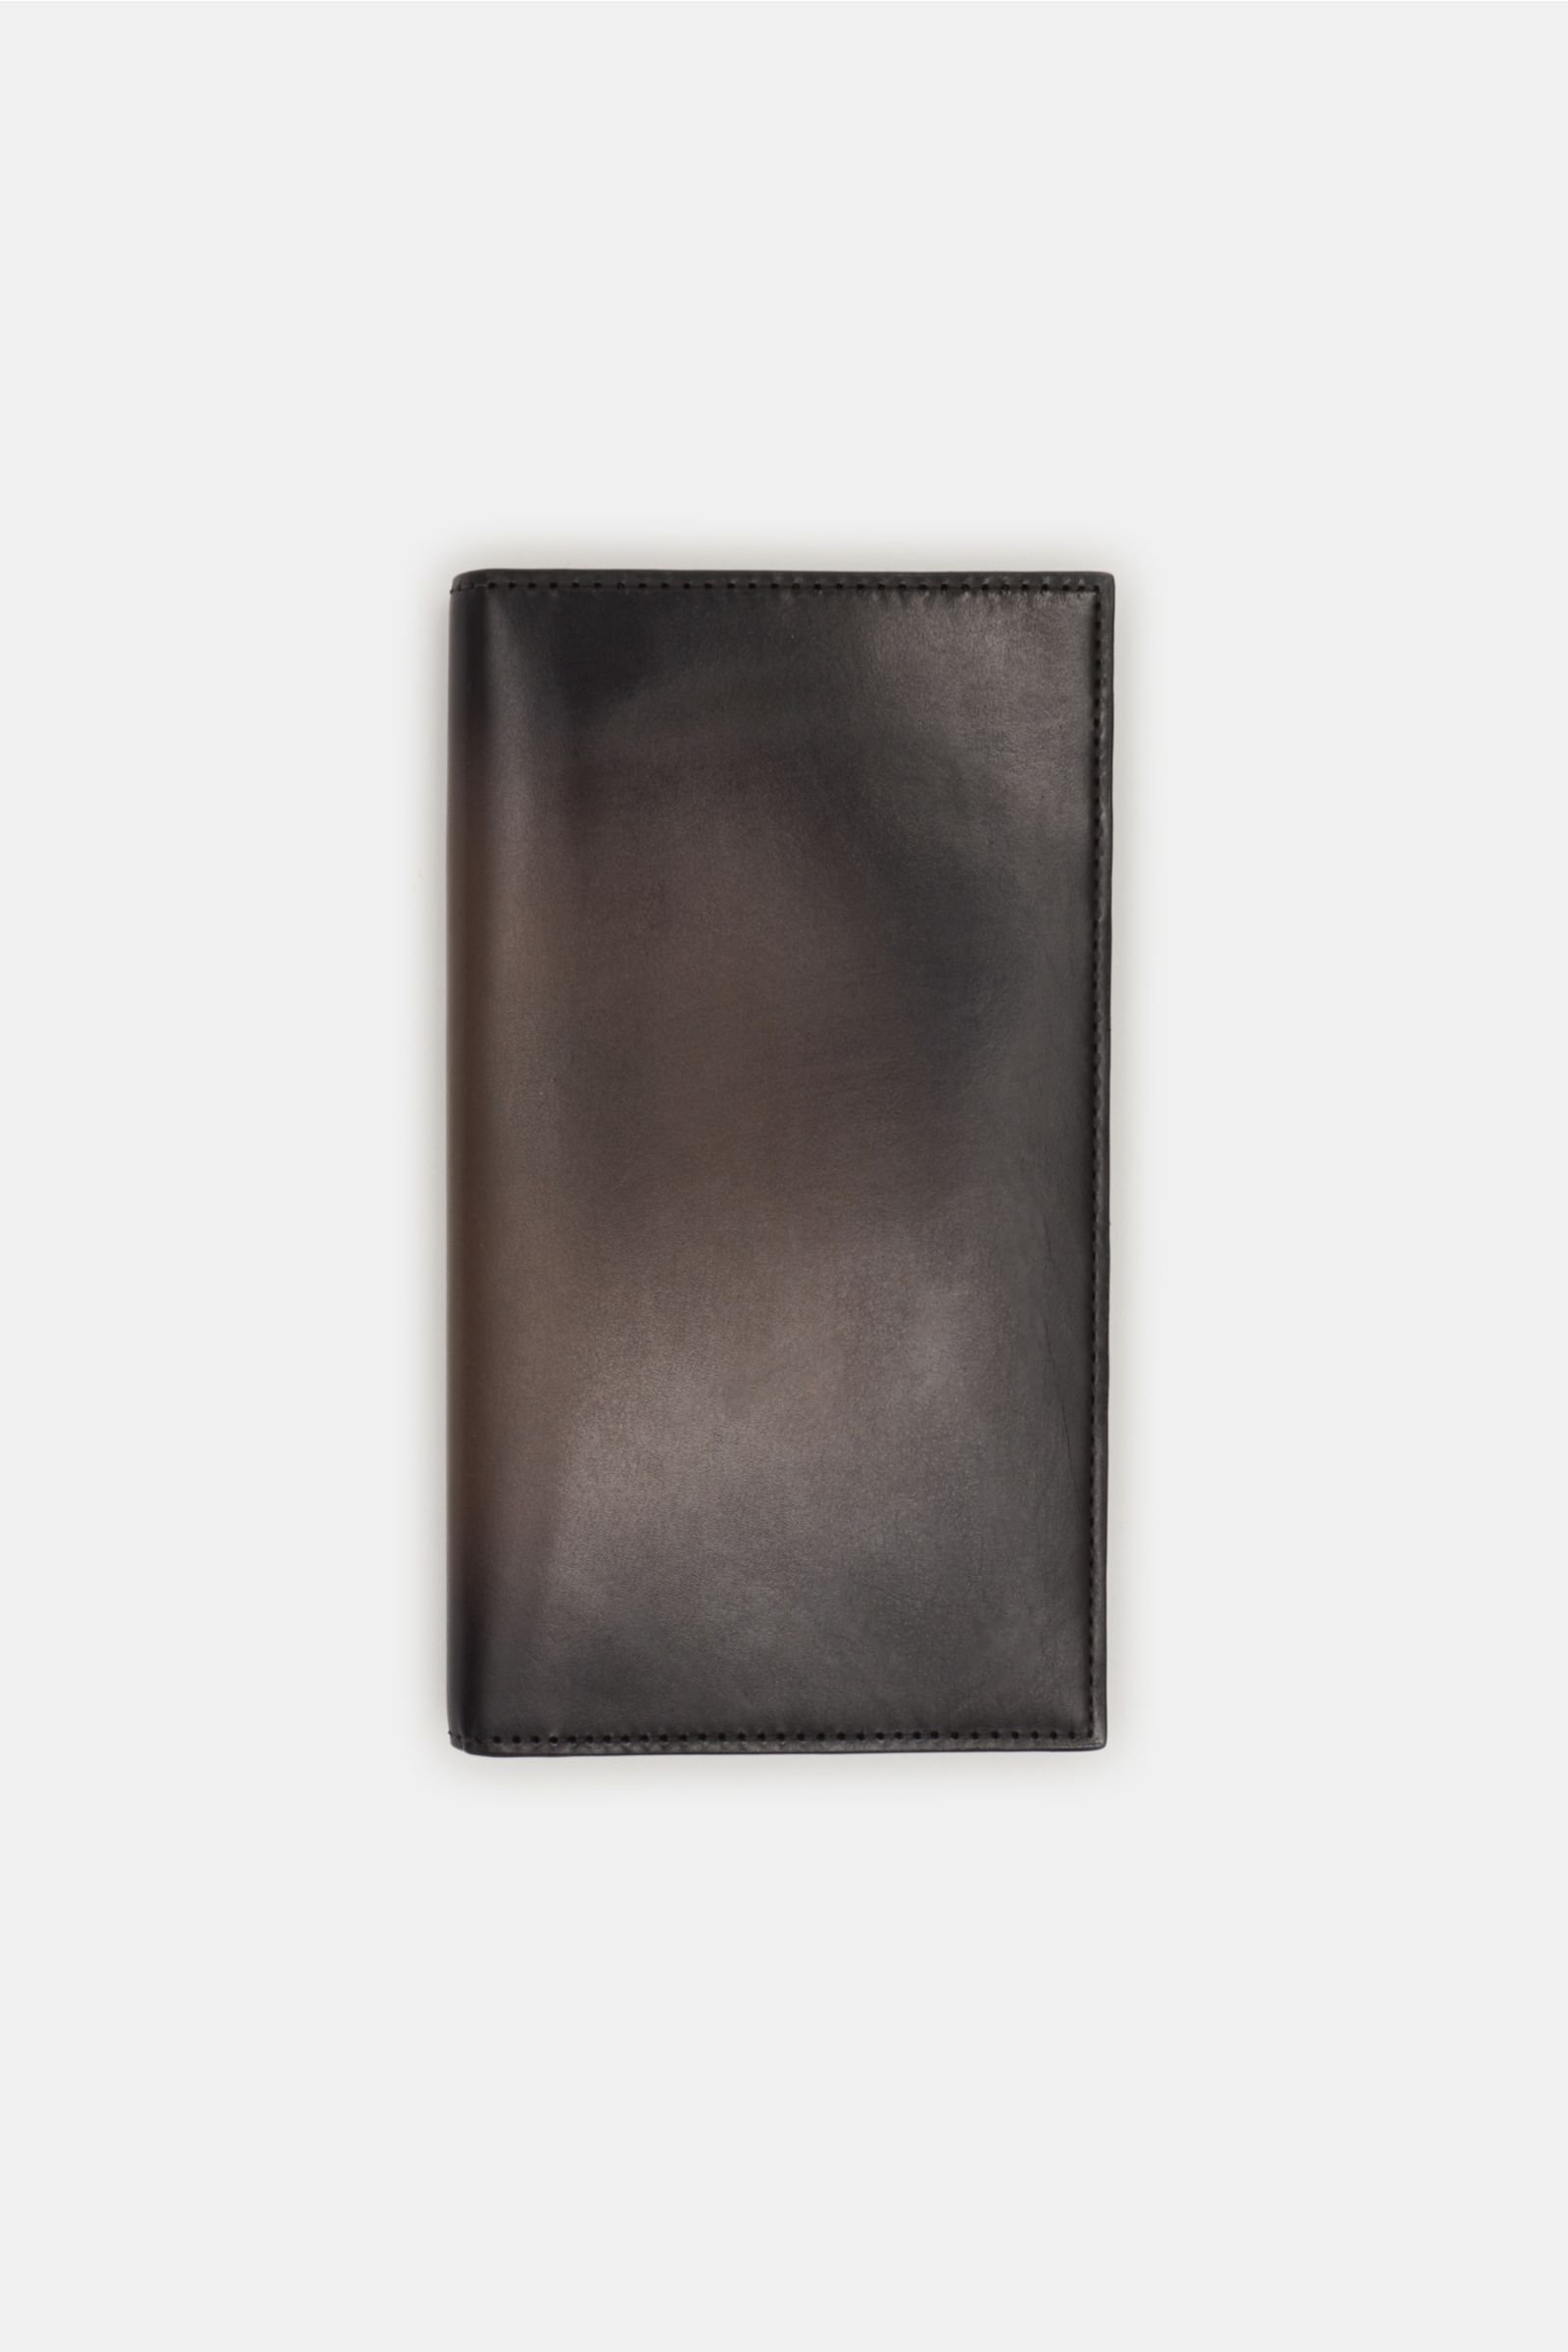 Credit card holder grey-brown